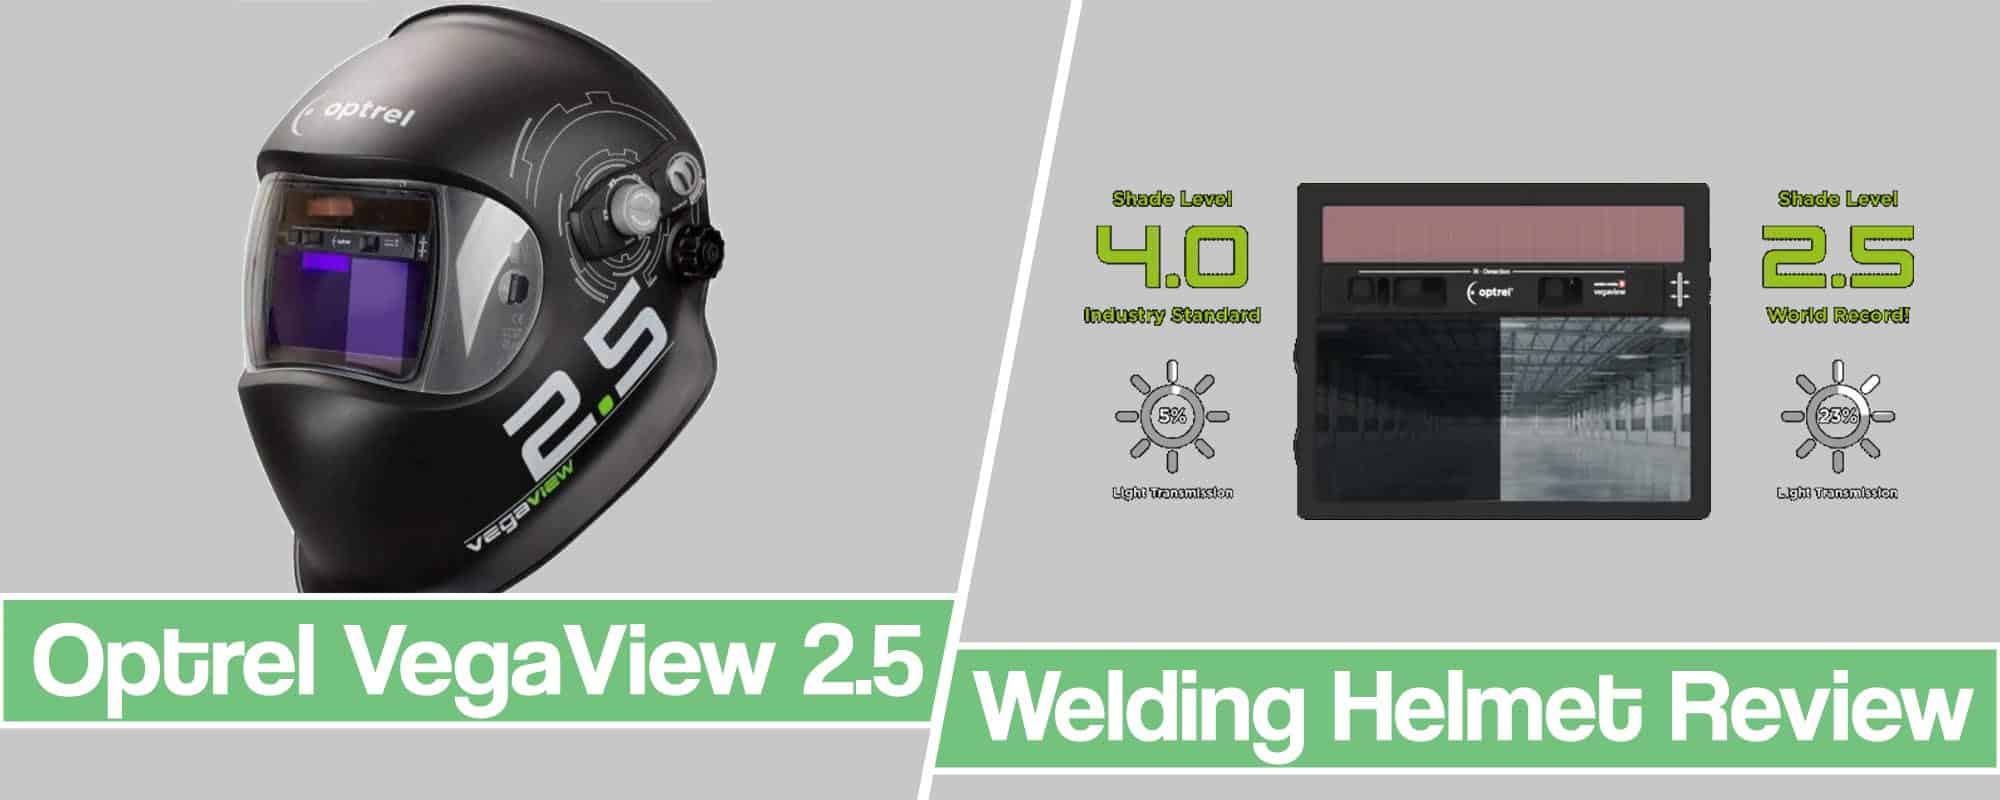 Optrel VegaView 2.5 Welding Helmet Review 2023 Pros & Cons of its Features